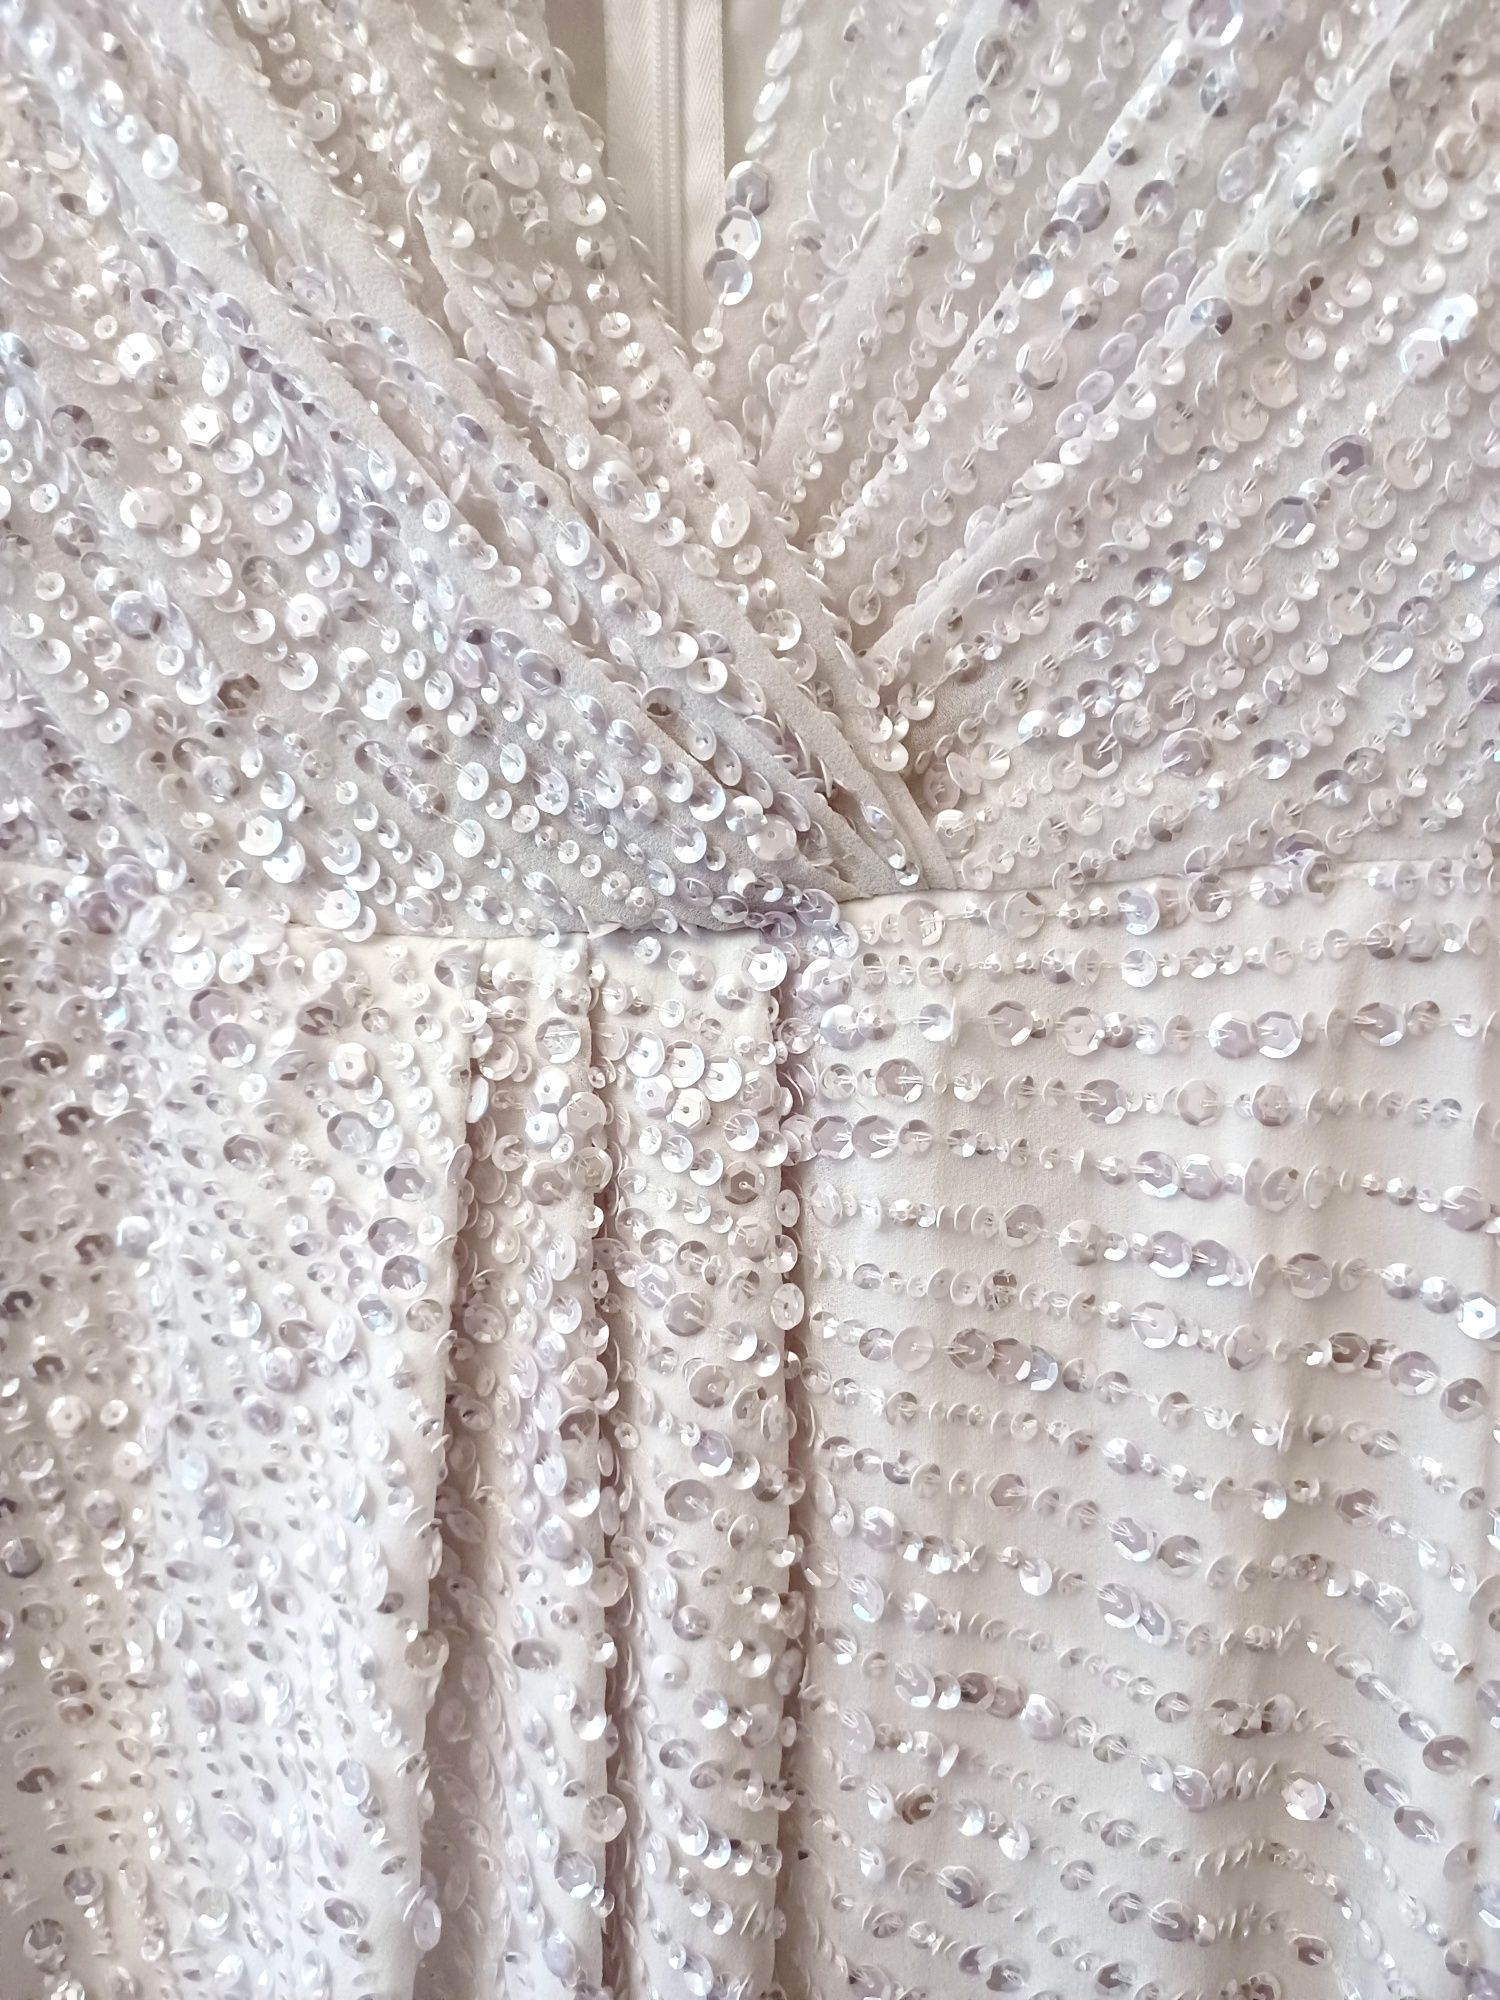 Suknia sukienka Asos biała cekinowa srebrna nowa 36 38 s m sesja foto